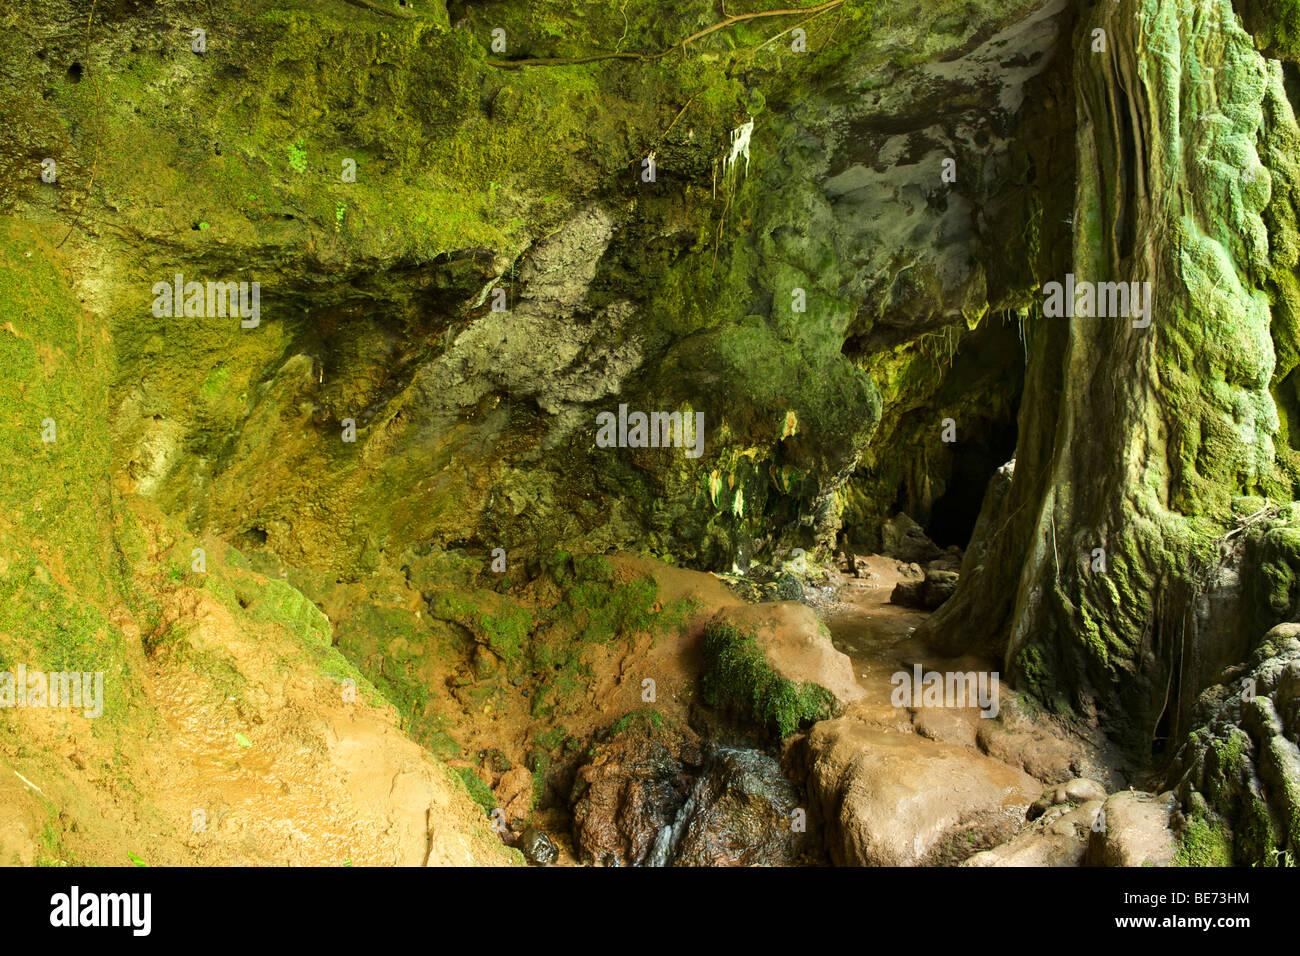 The Ganyinamwiru caves found west of Fort Portal in Uganda. Stock Photo